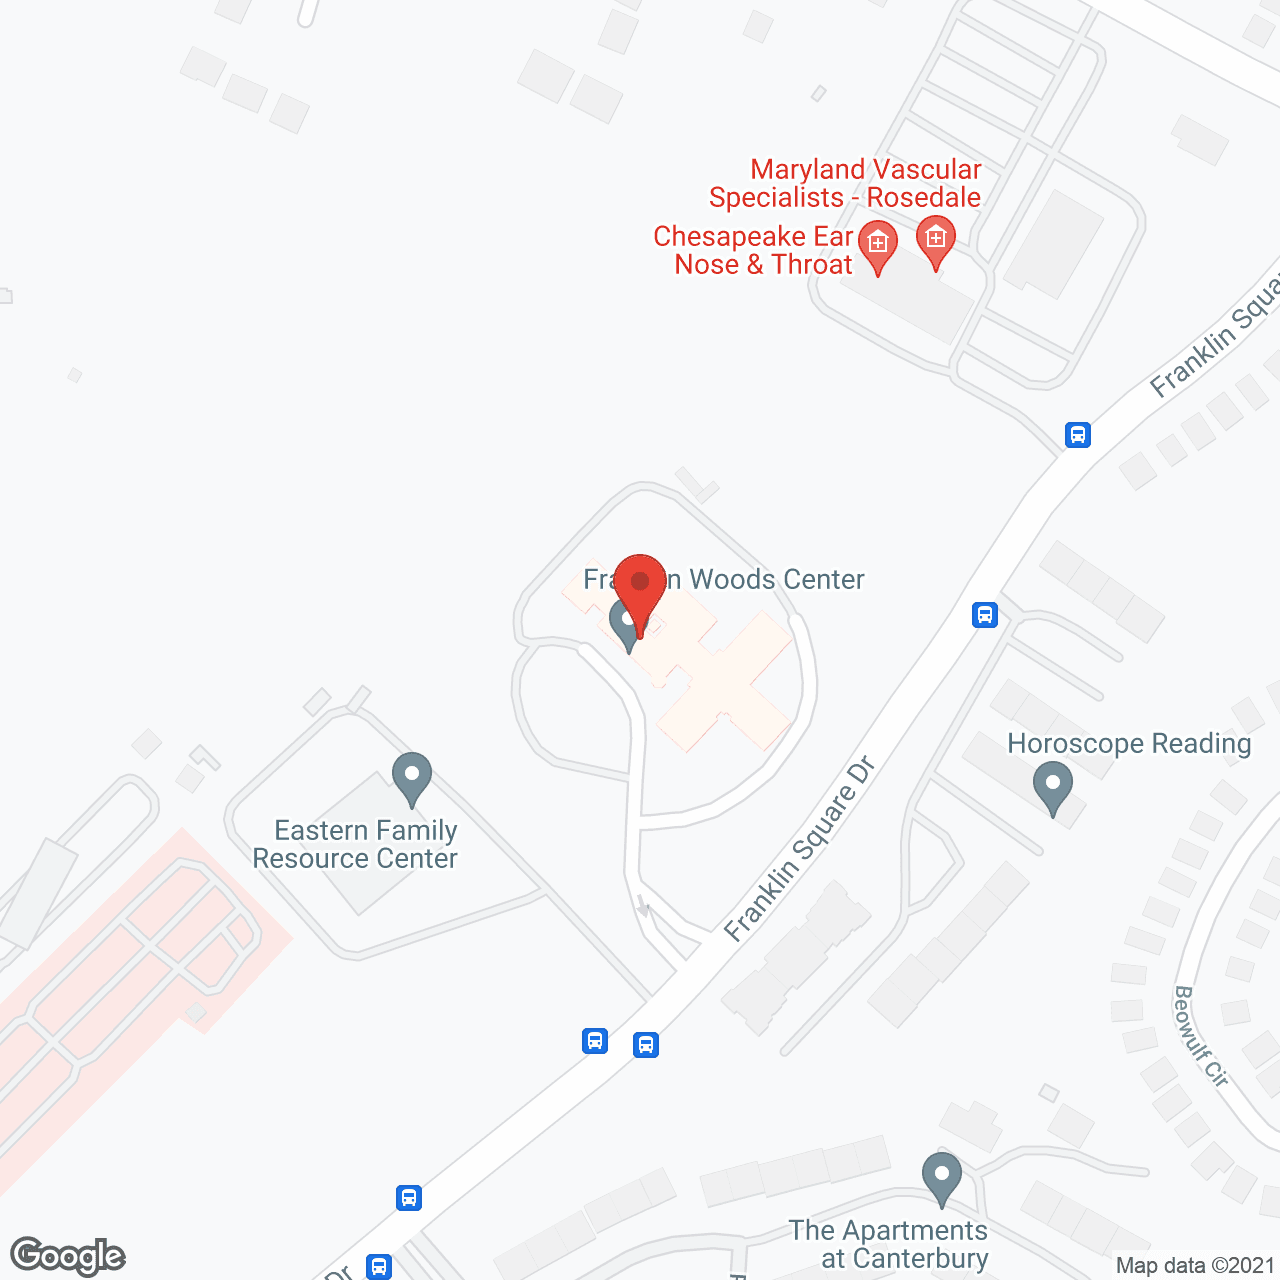 Franklin Woods Center in google map